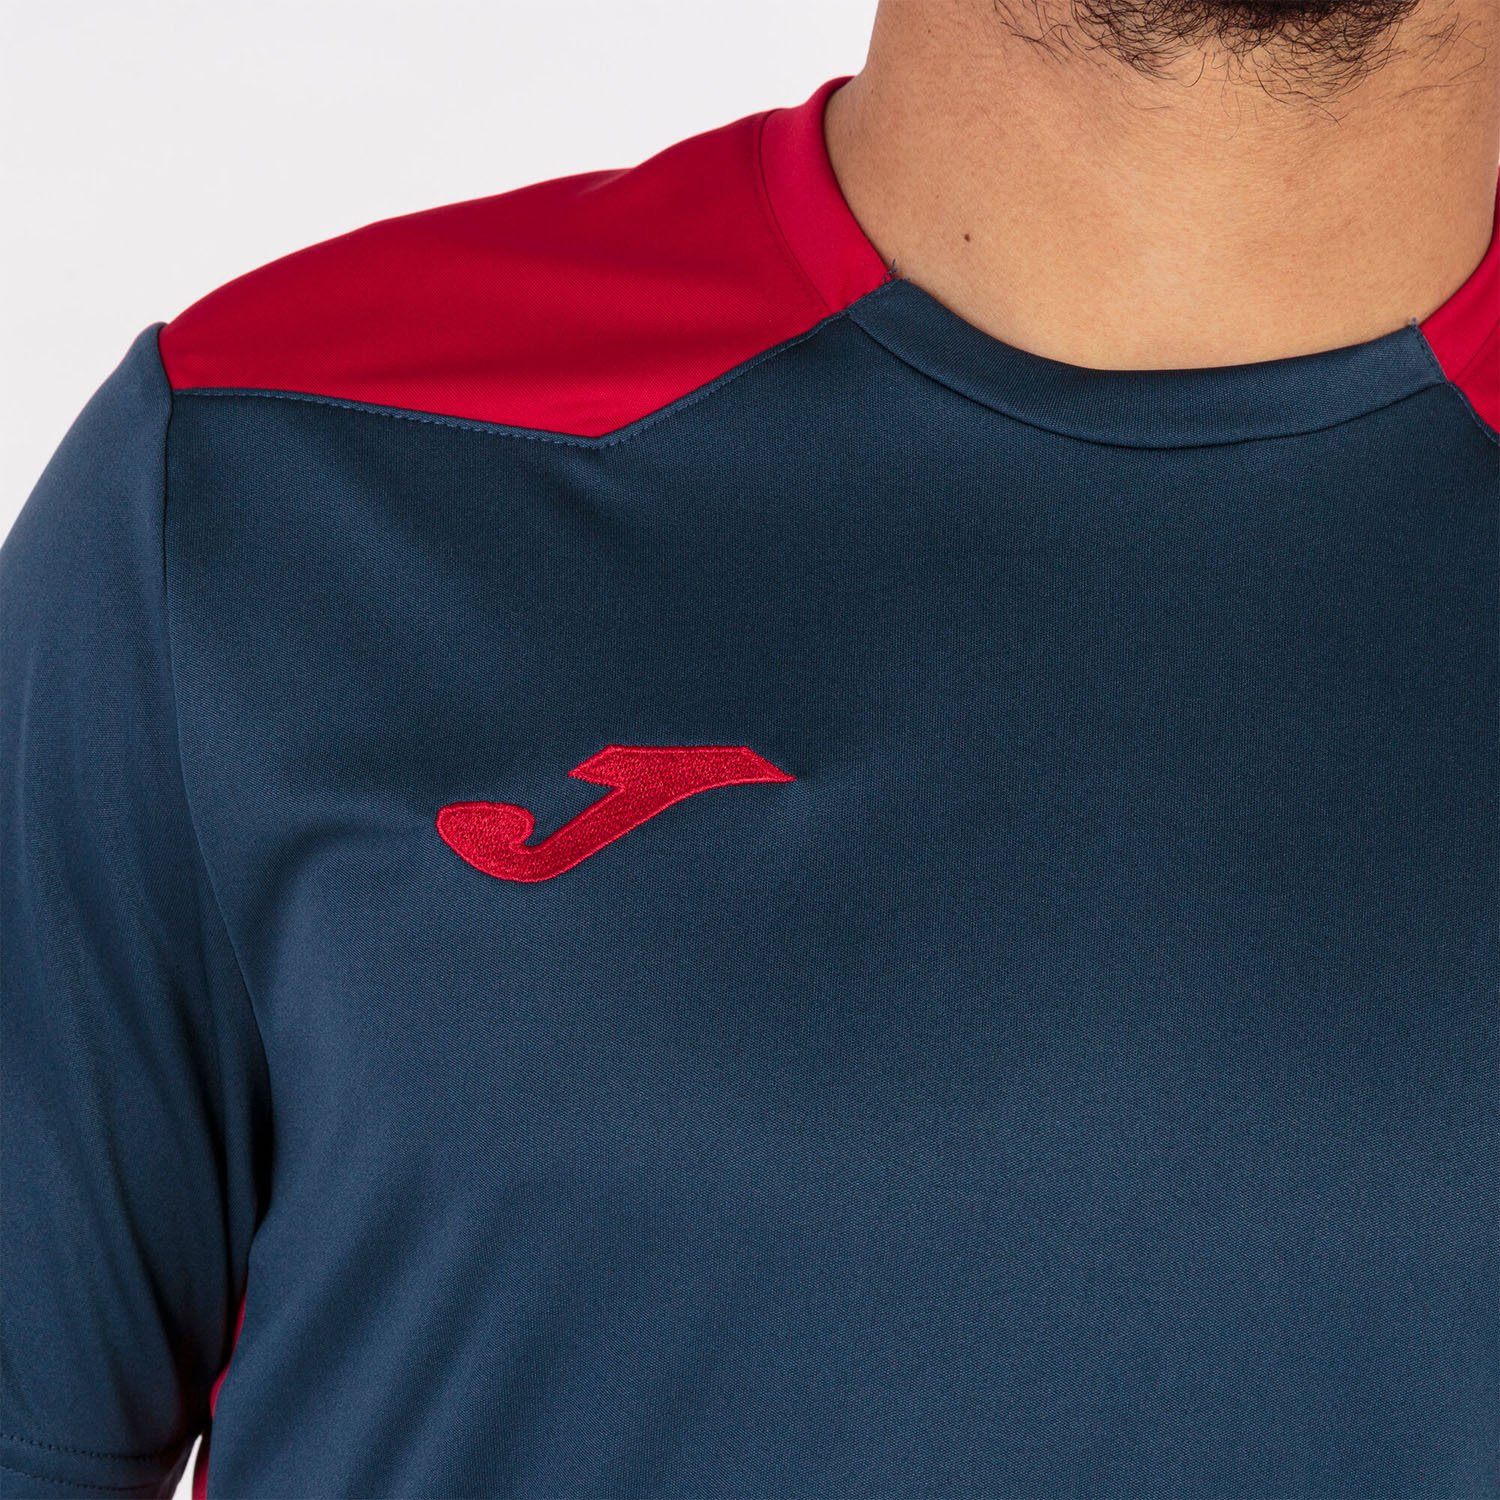 Joma Championship VI Camiseta - Navy/Red